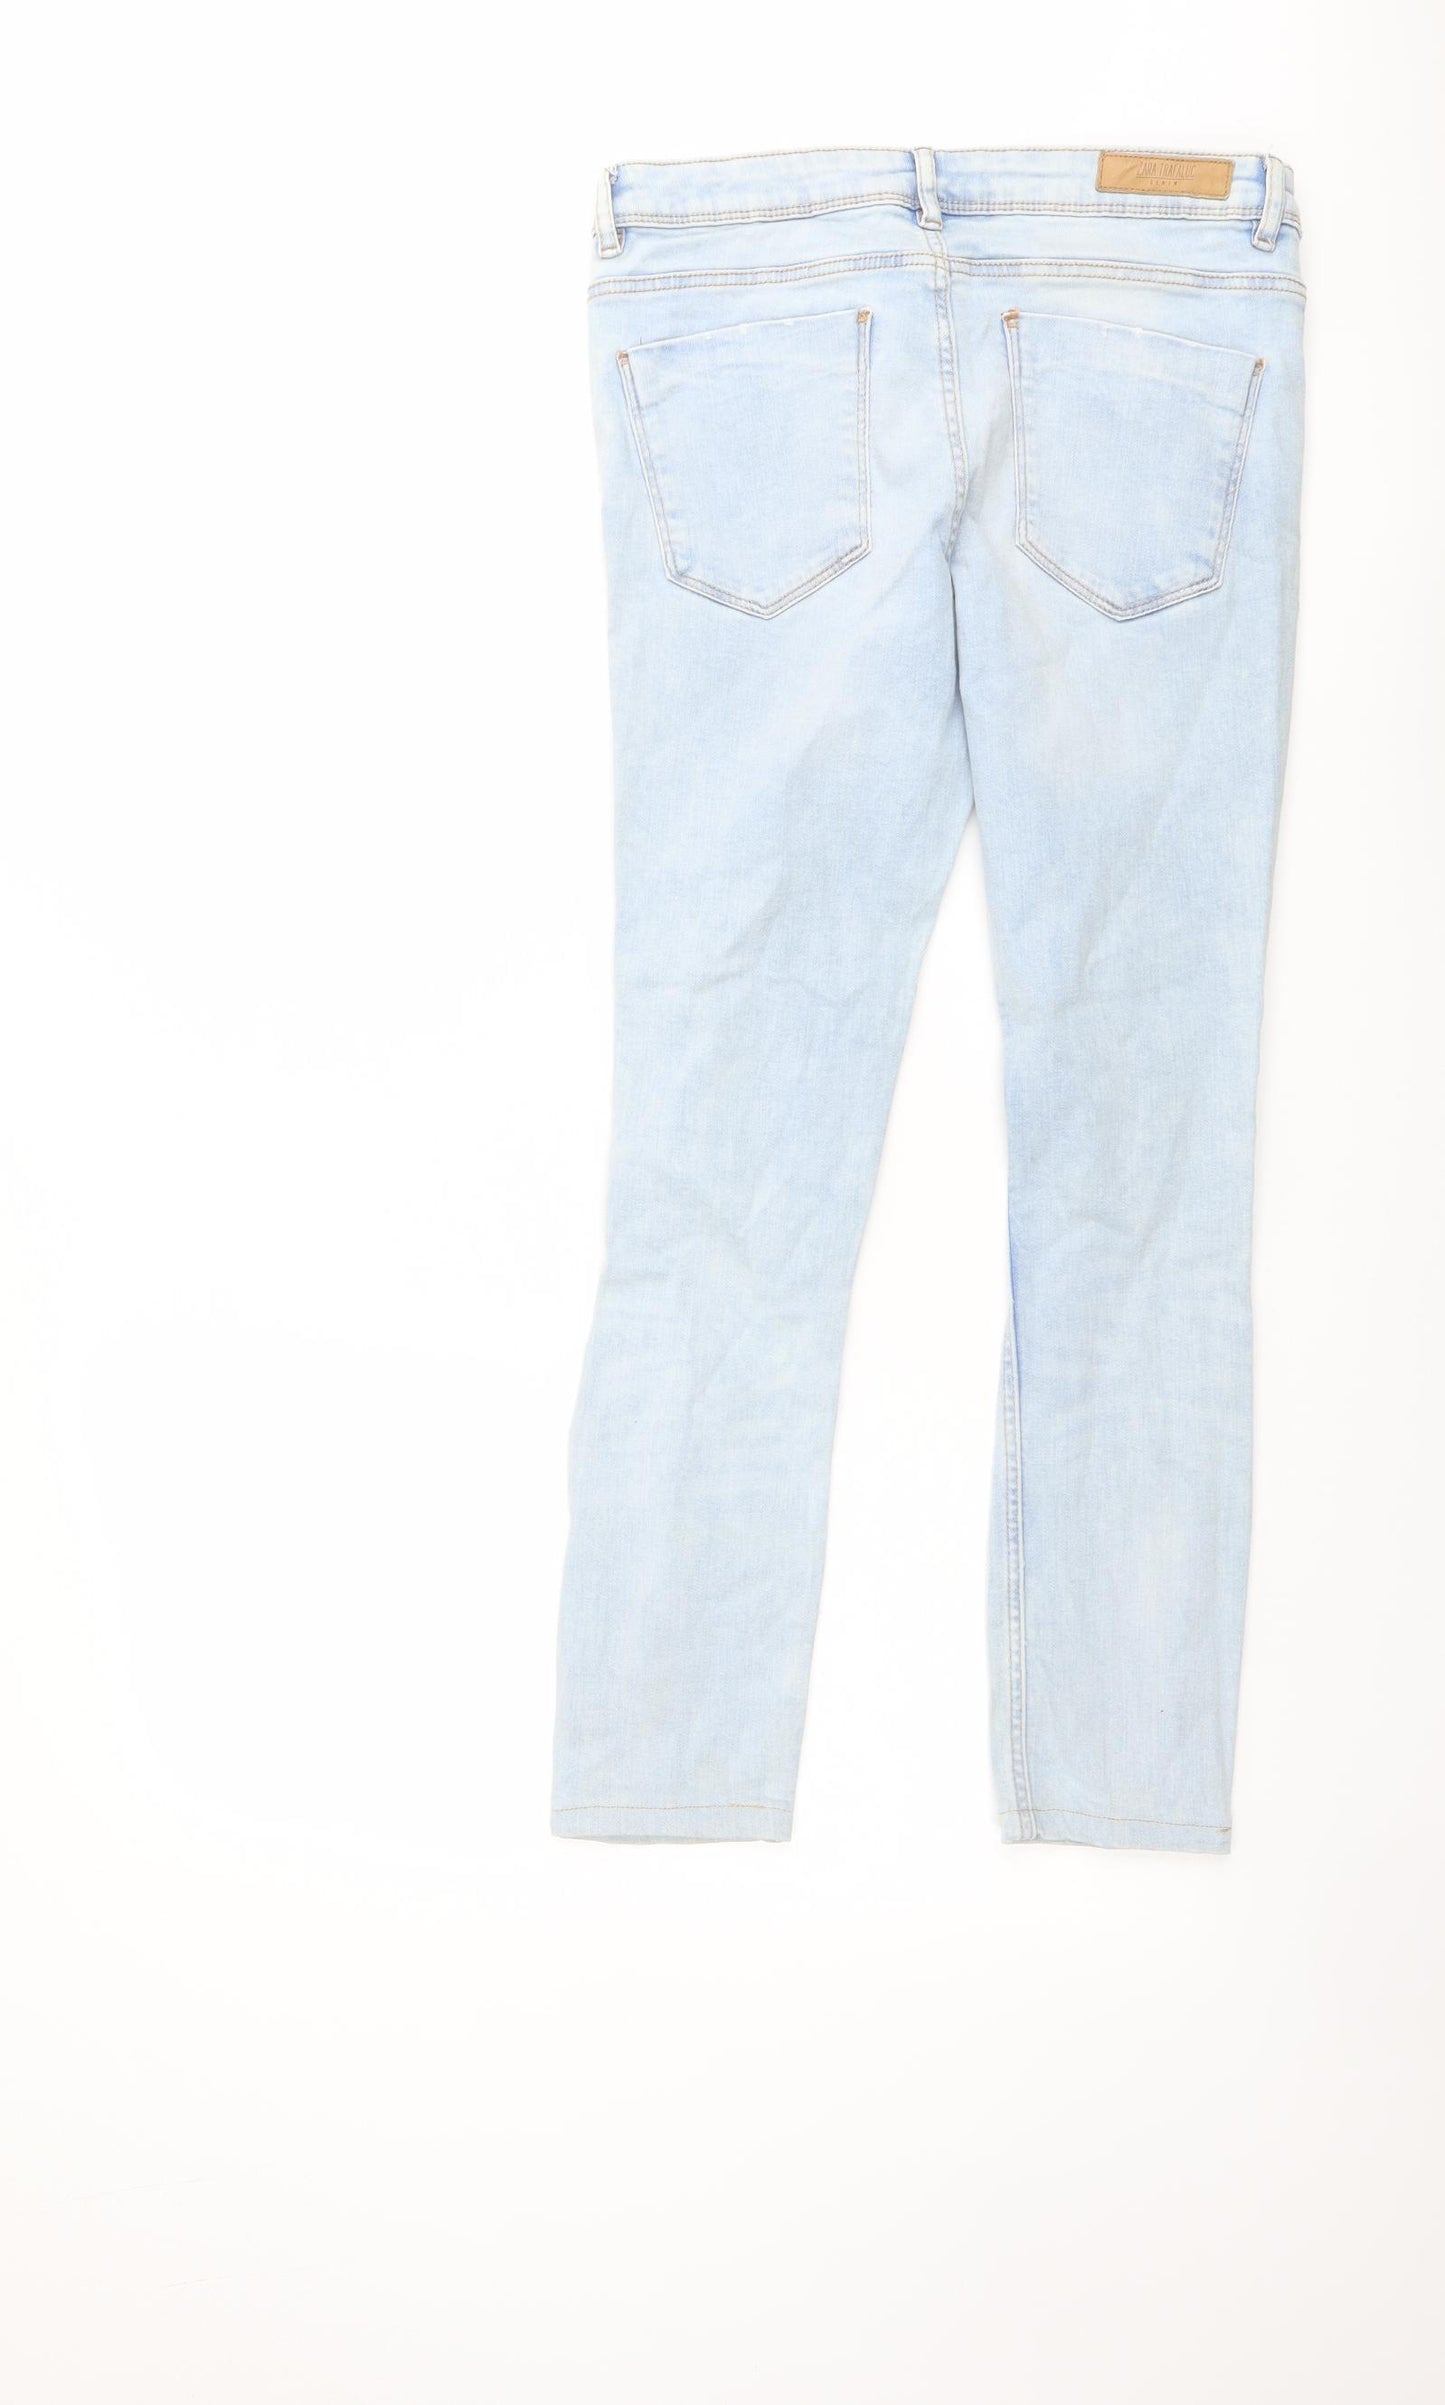 Zara Womens Blue Cotton Skinny Jeans Size 12 L24 in Regular Button